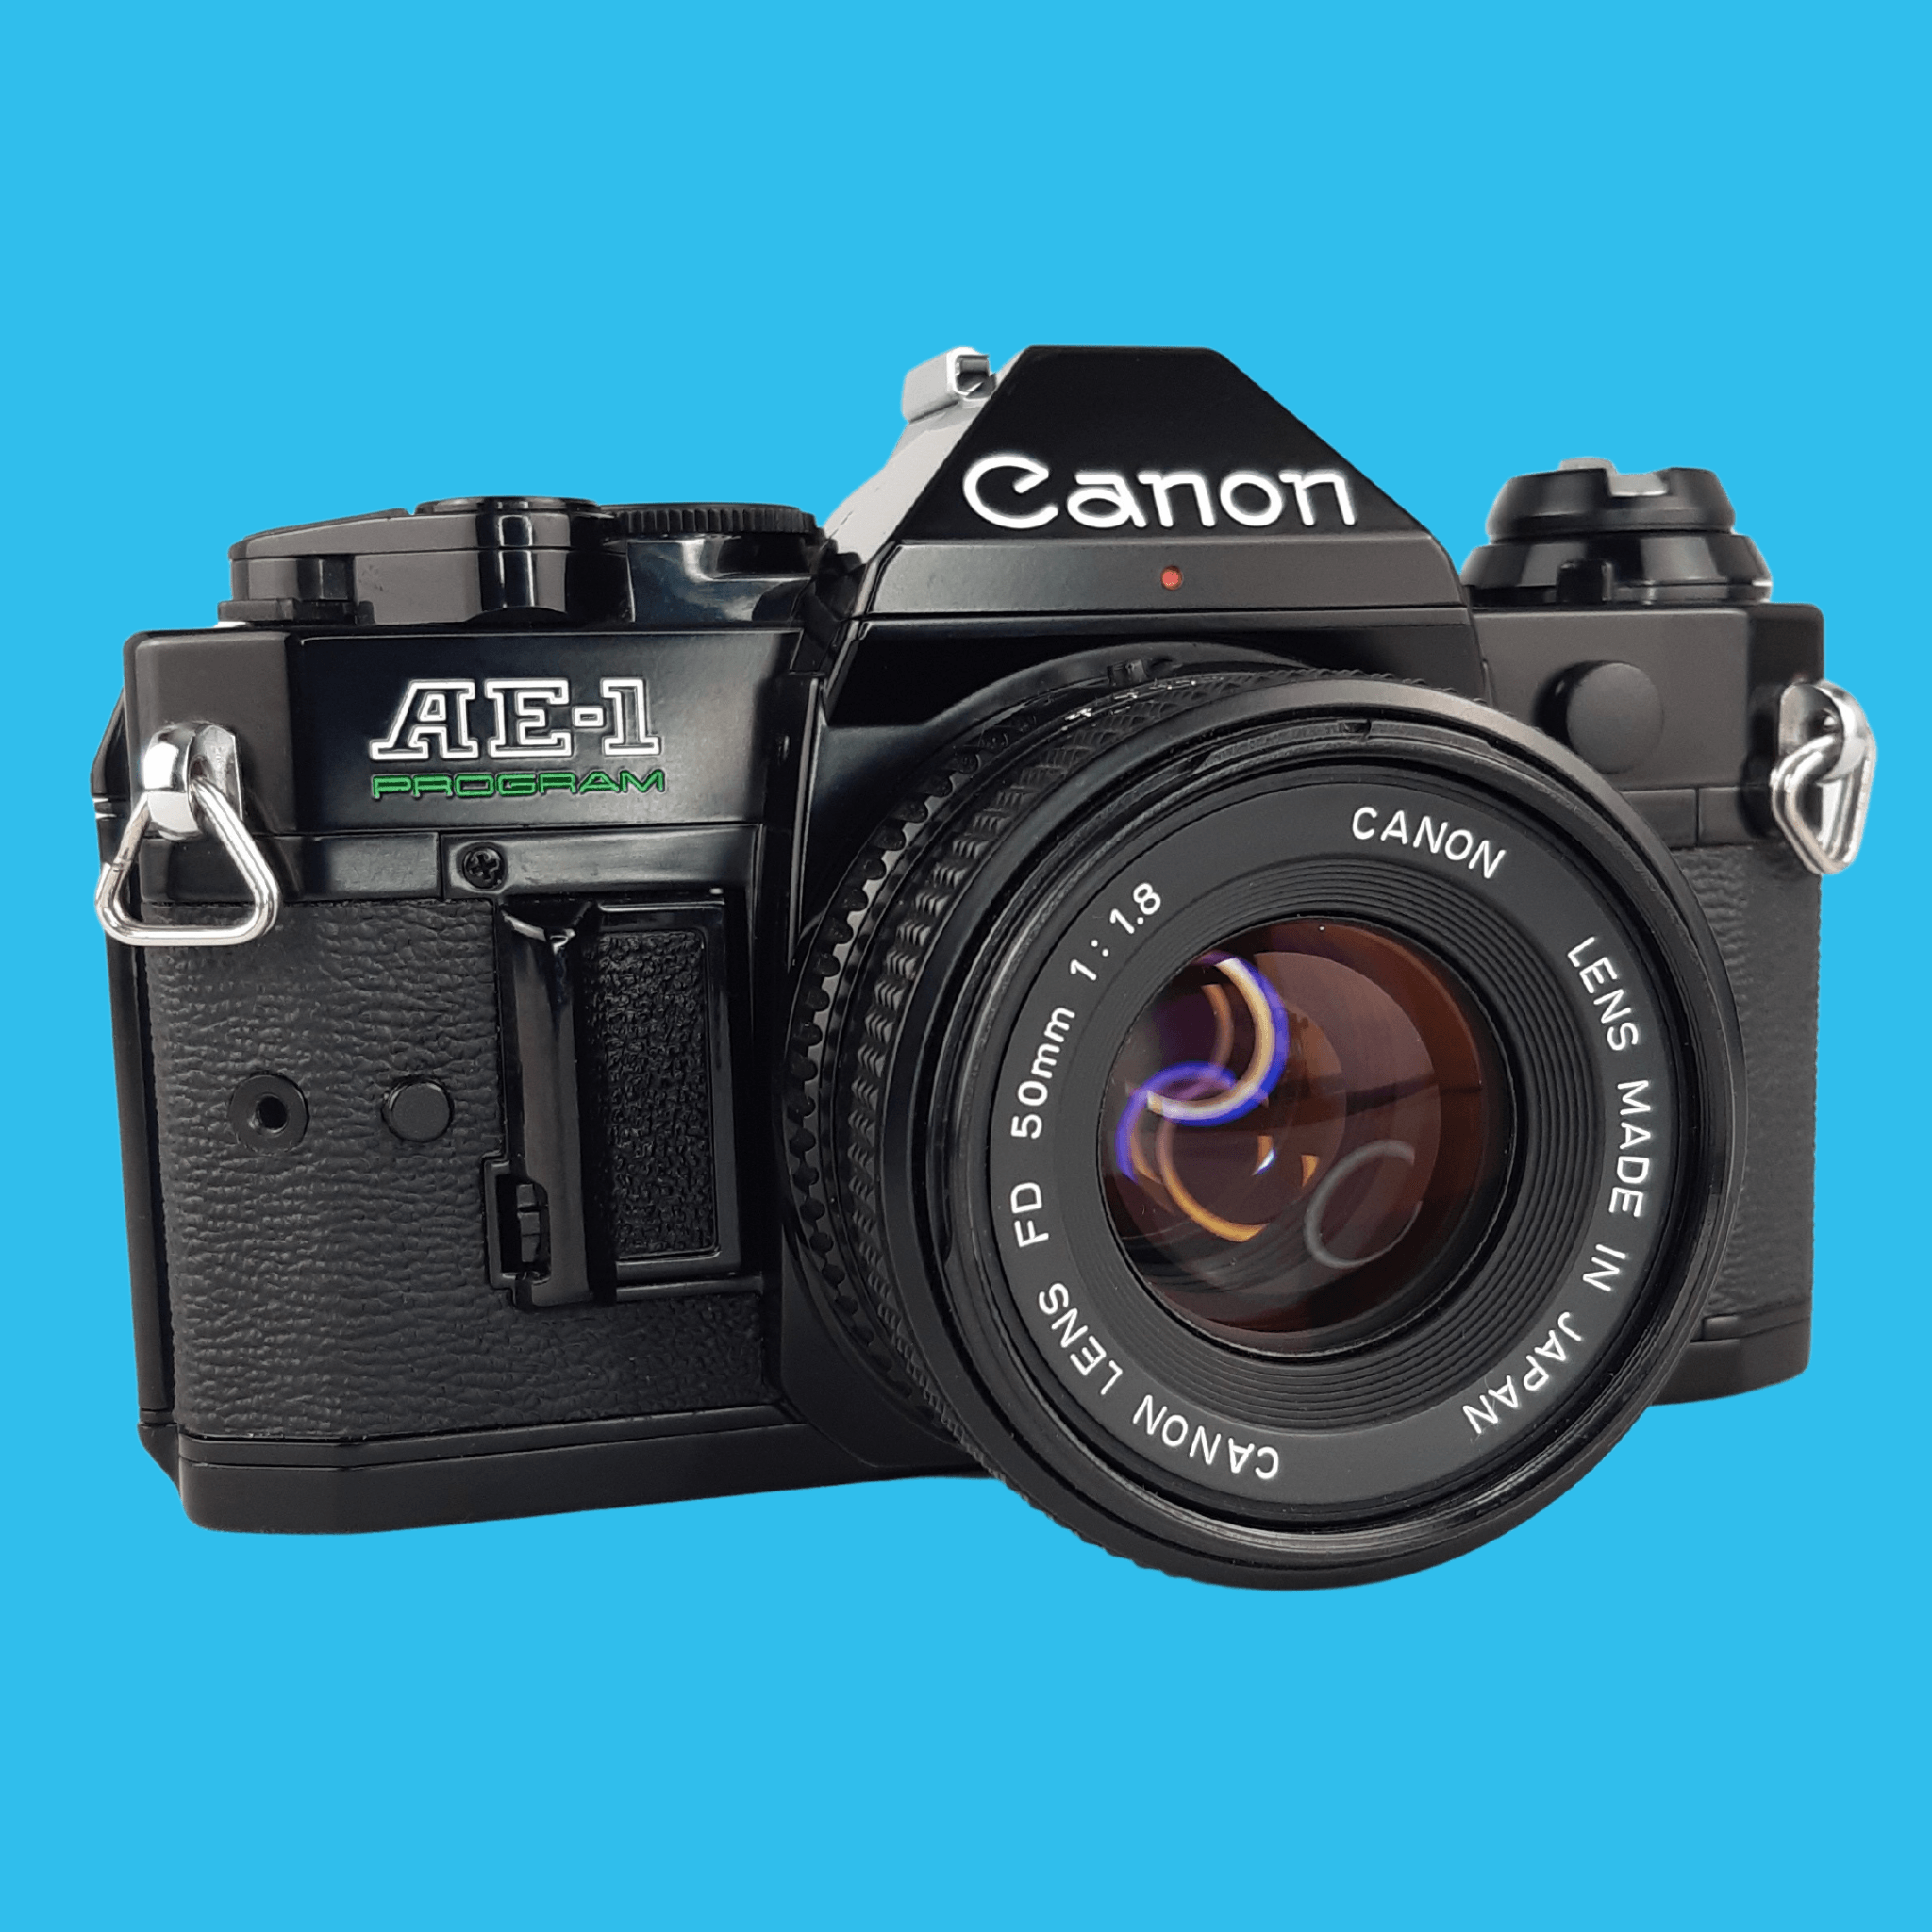 Canon 一眼レフカメラ AE-1 - カメラ